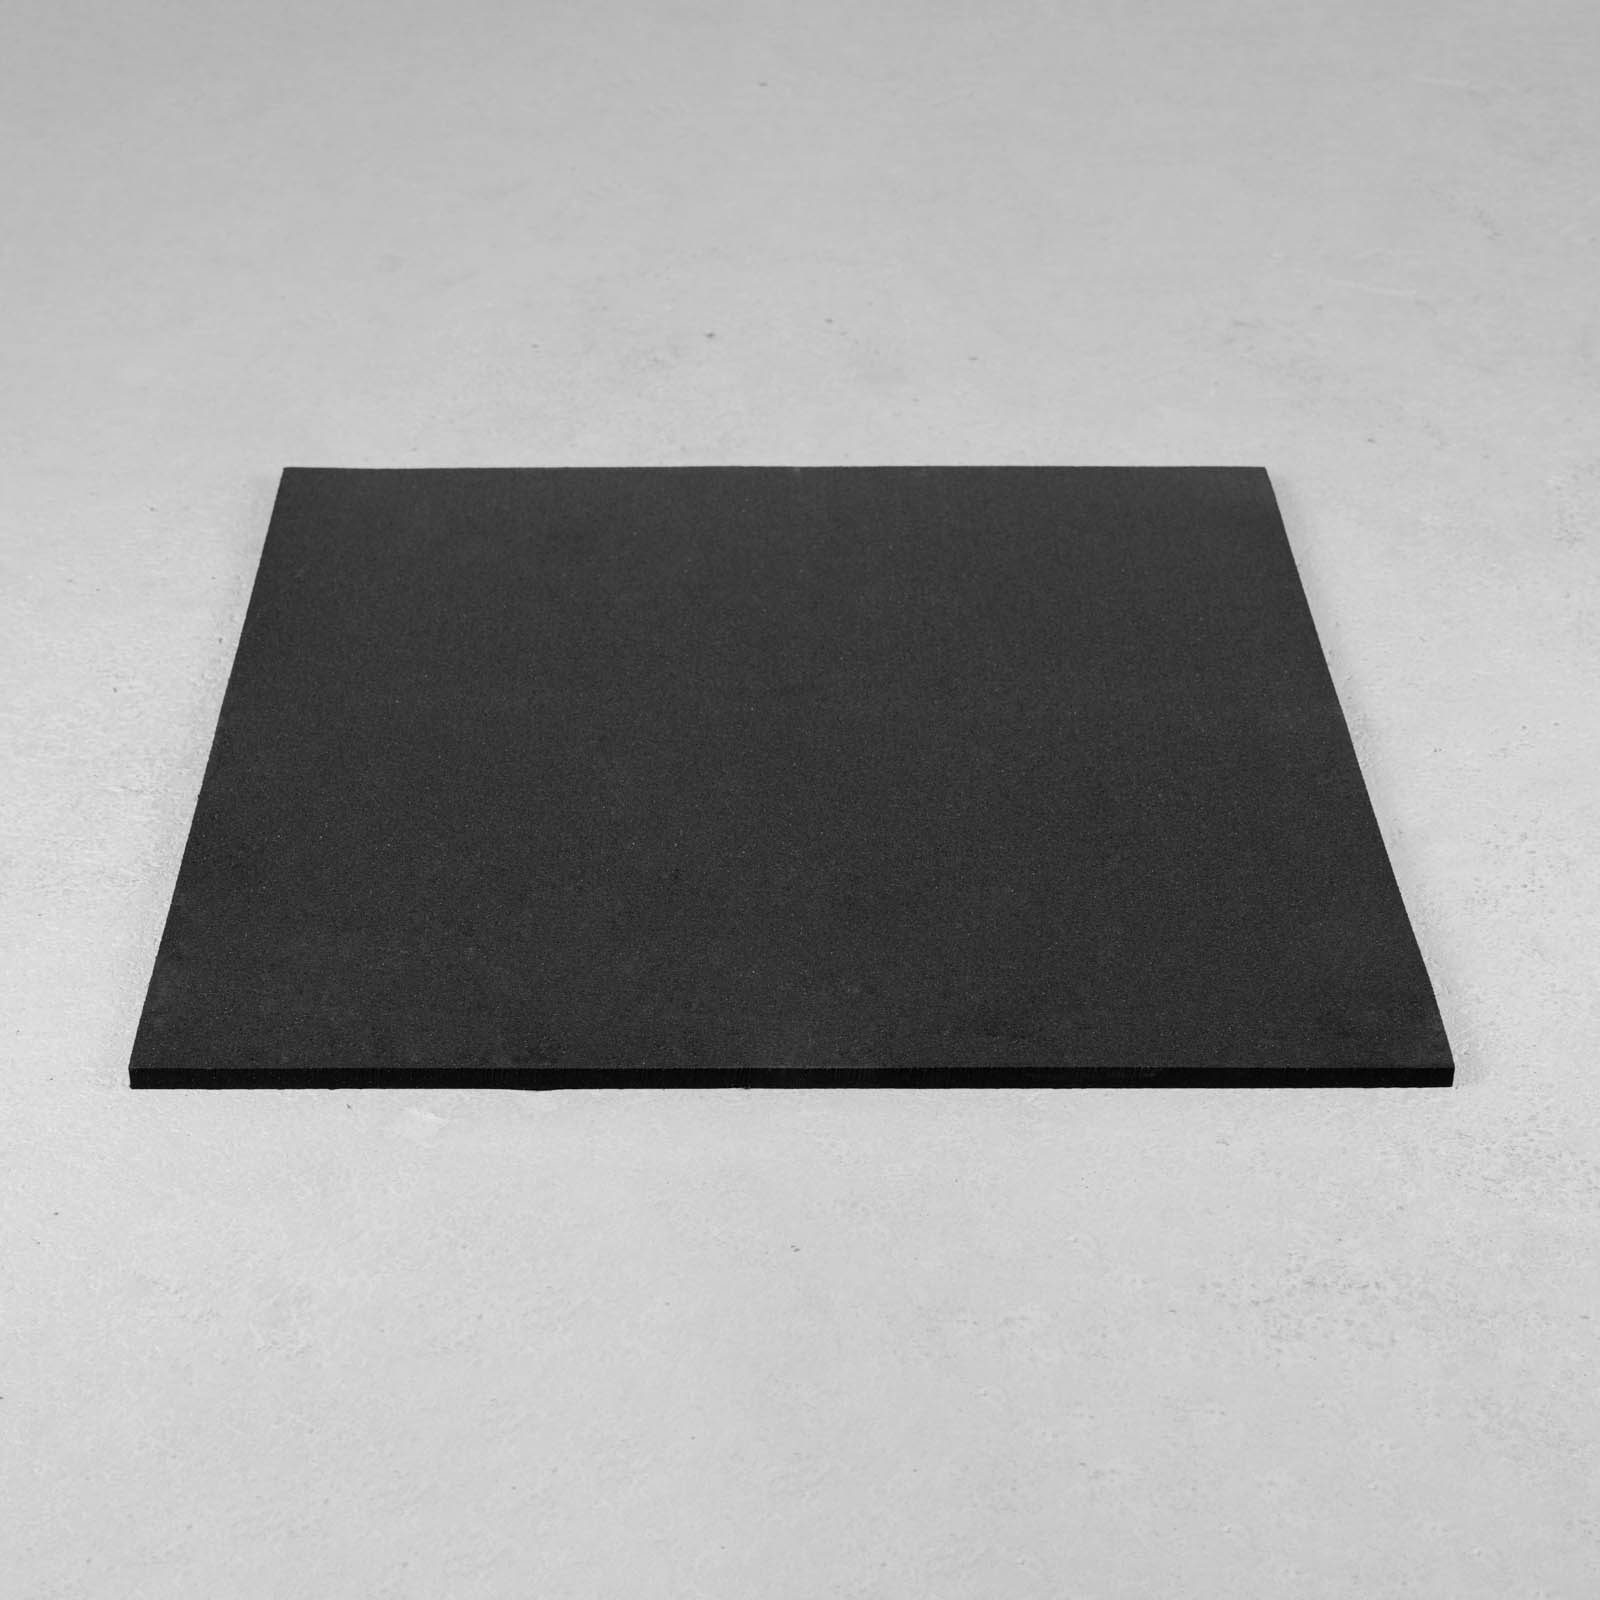 Rabljeno - Royal Rubber Floor 100x100 1.5cm